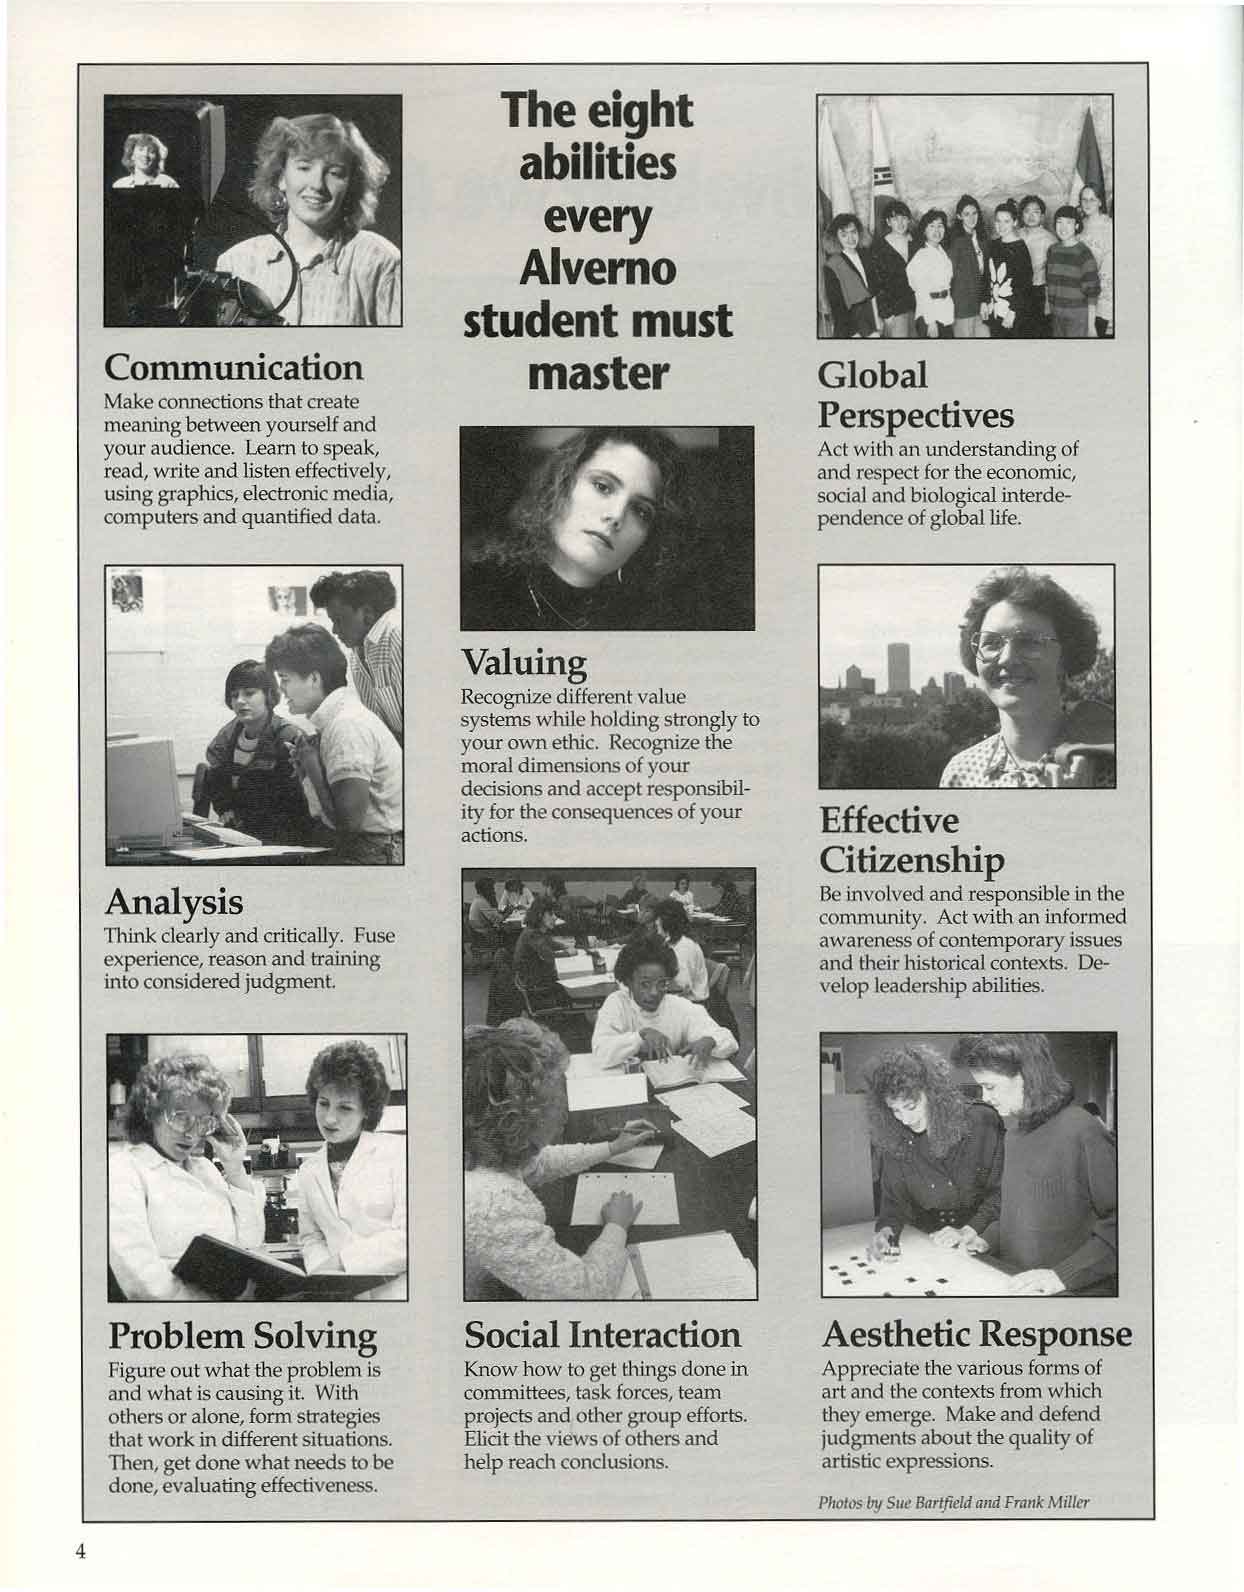 Alverno's 8 abilities described in a 1992 issue of Alverno Magazine